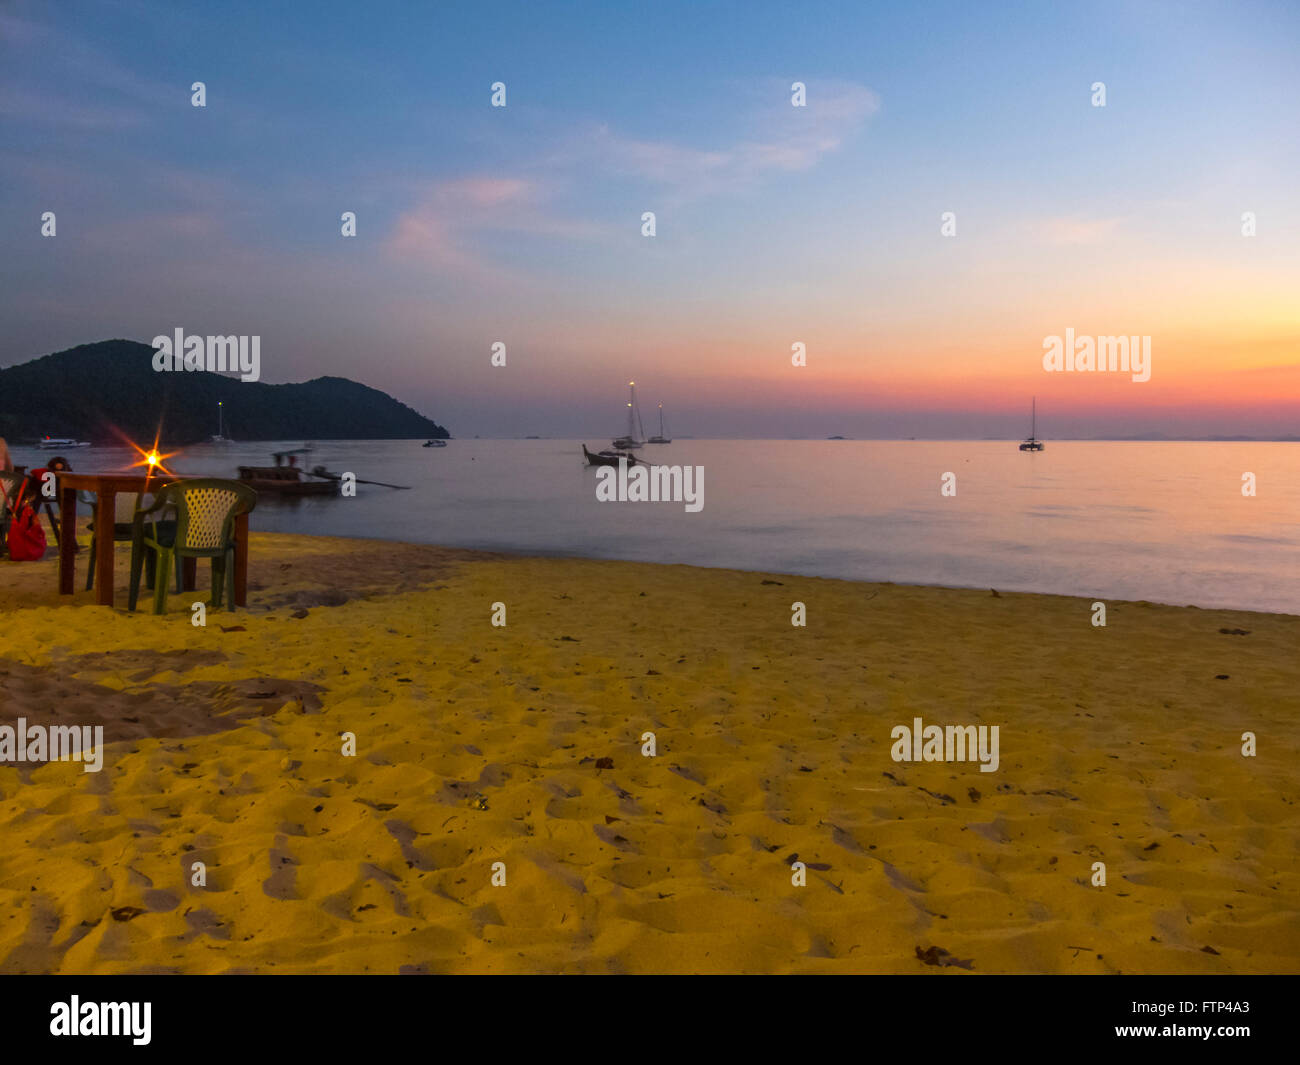 Amazing sunset, from the beach at the Yao Yai beach resort, Koh Yao Yai Thailand. Looking towards Phuket. Stock Photo